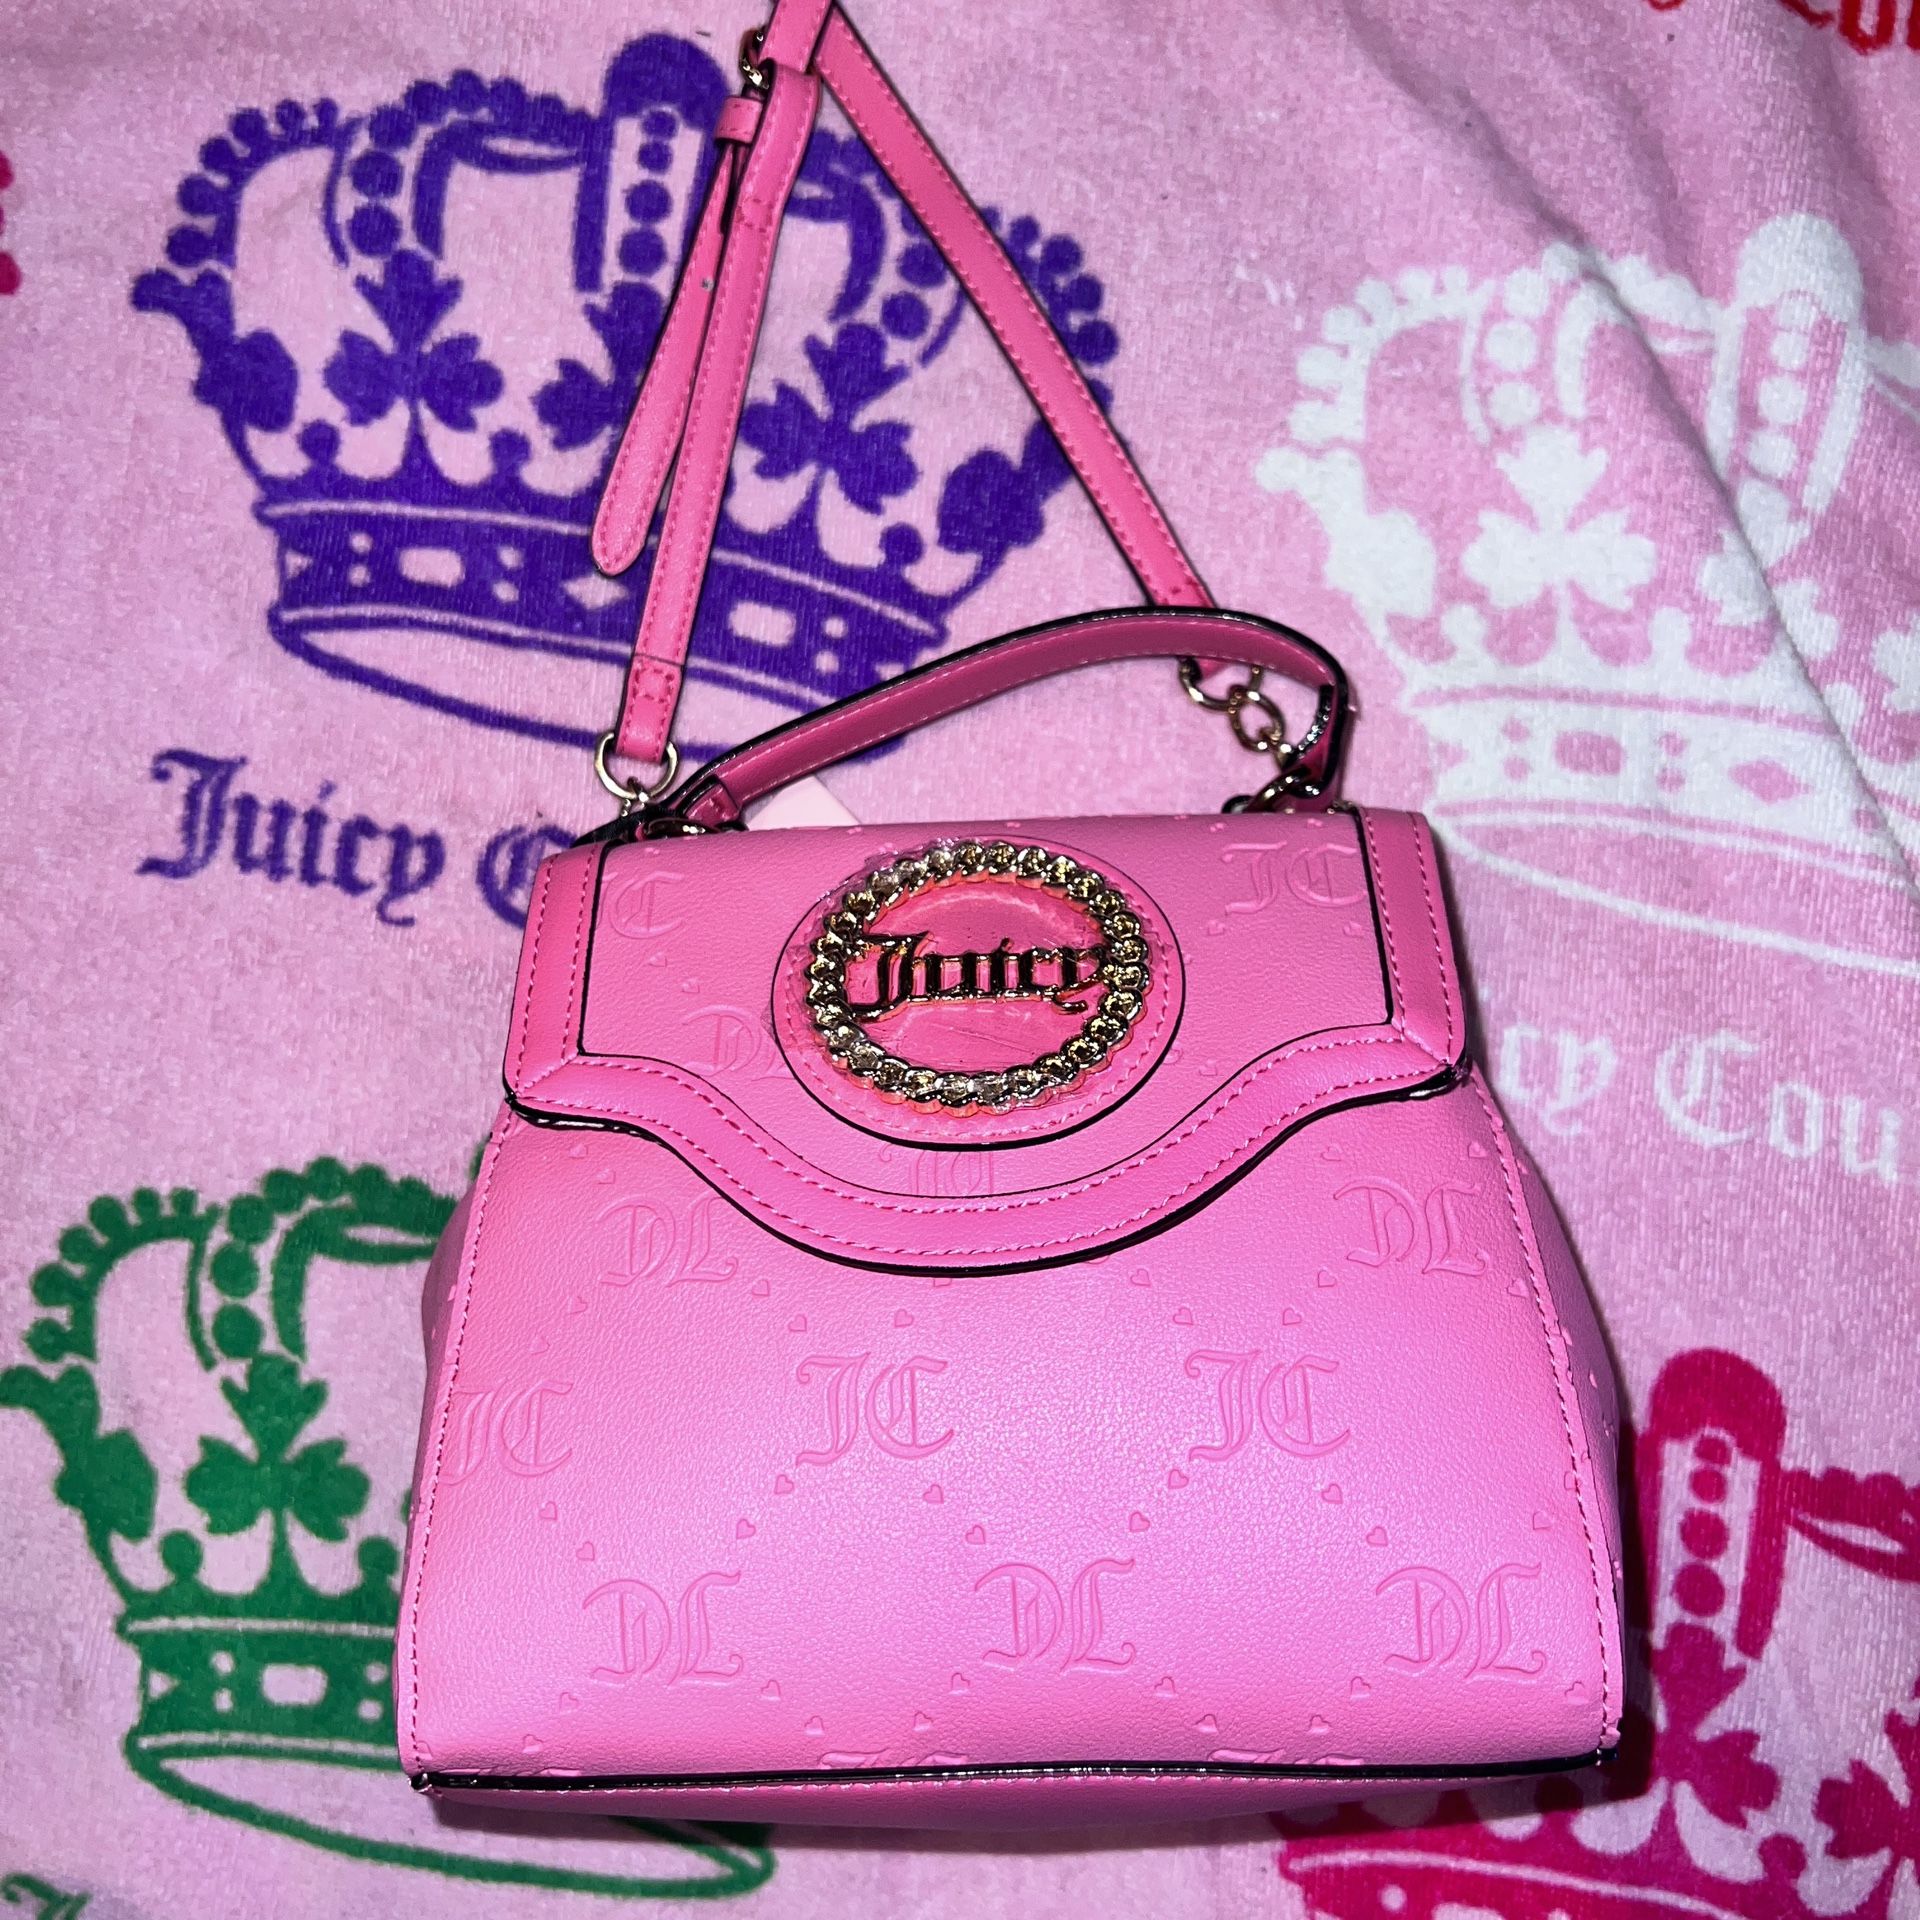 New Pink Juicy Couture Purse Handbag Stay In Circle Crossbody Bag 